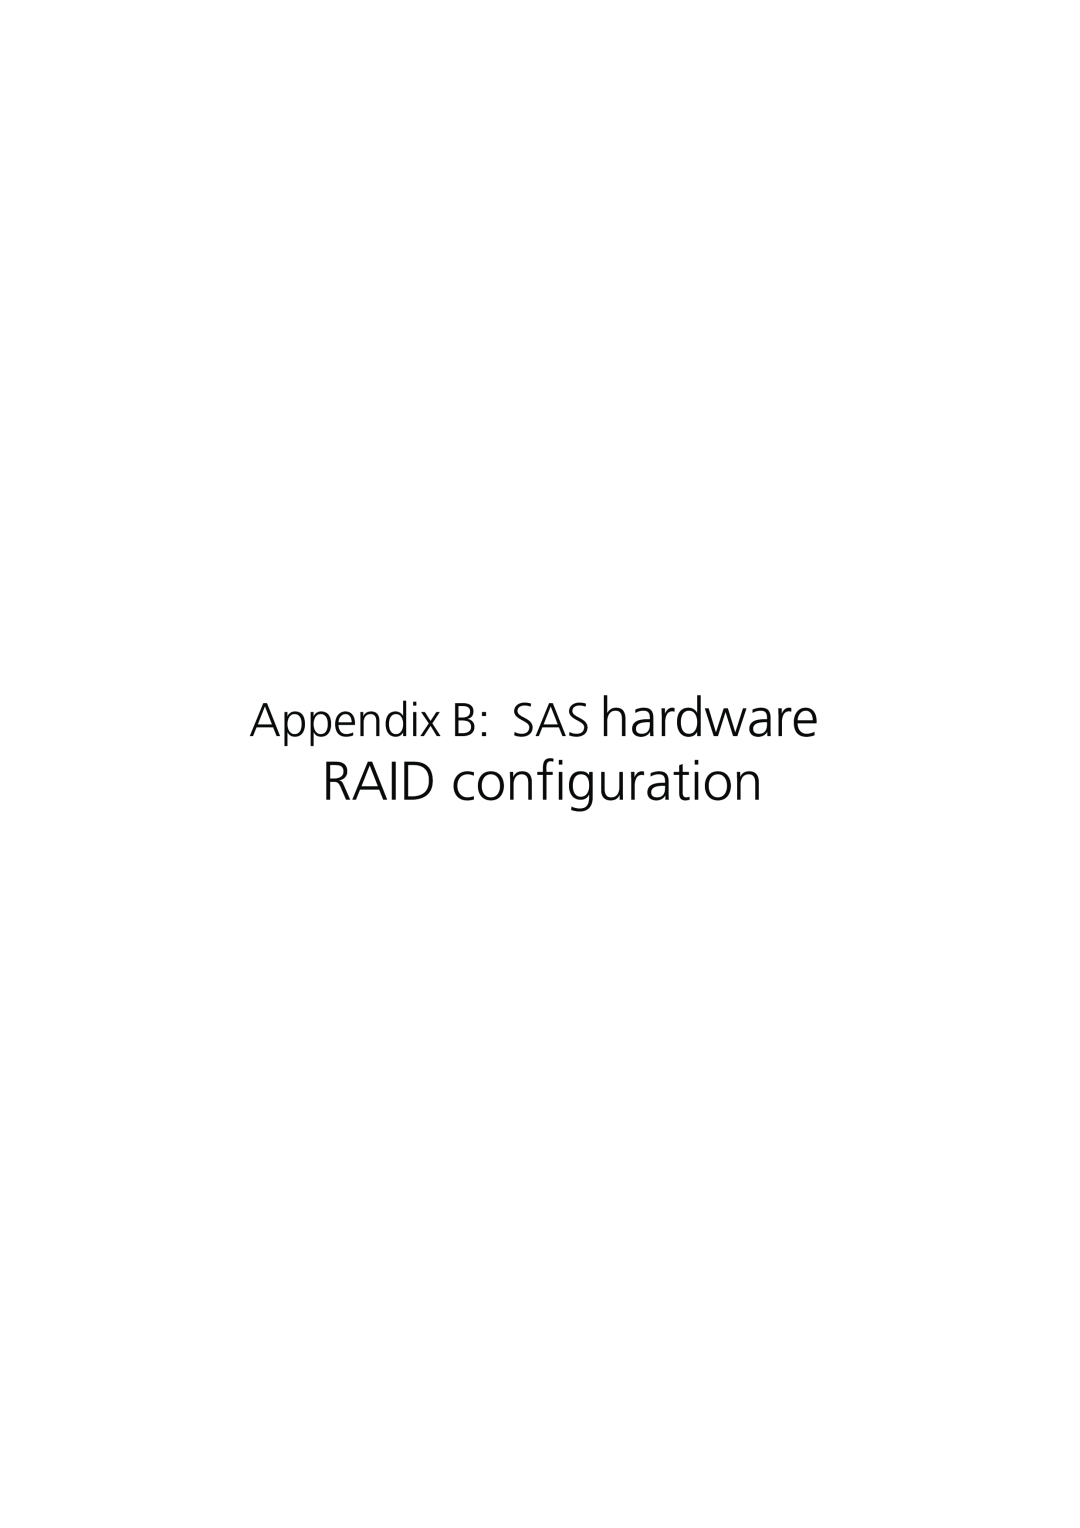 Acer R720 Series manual RAID configuration, Appendix B SAS hardware 